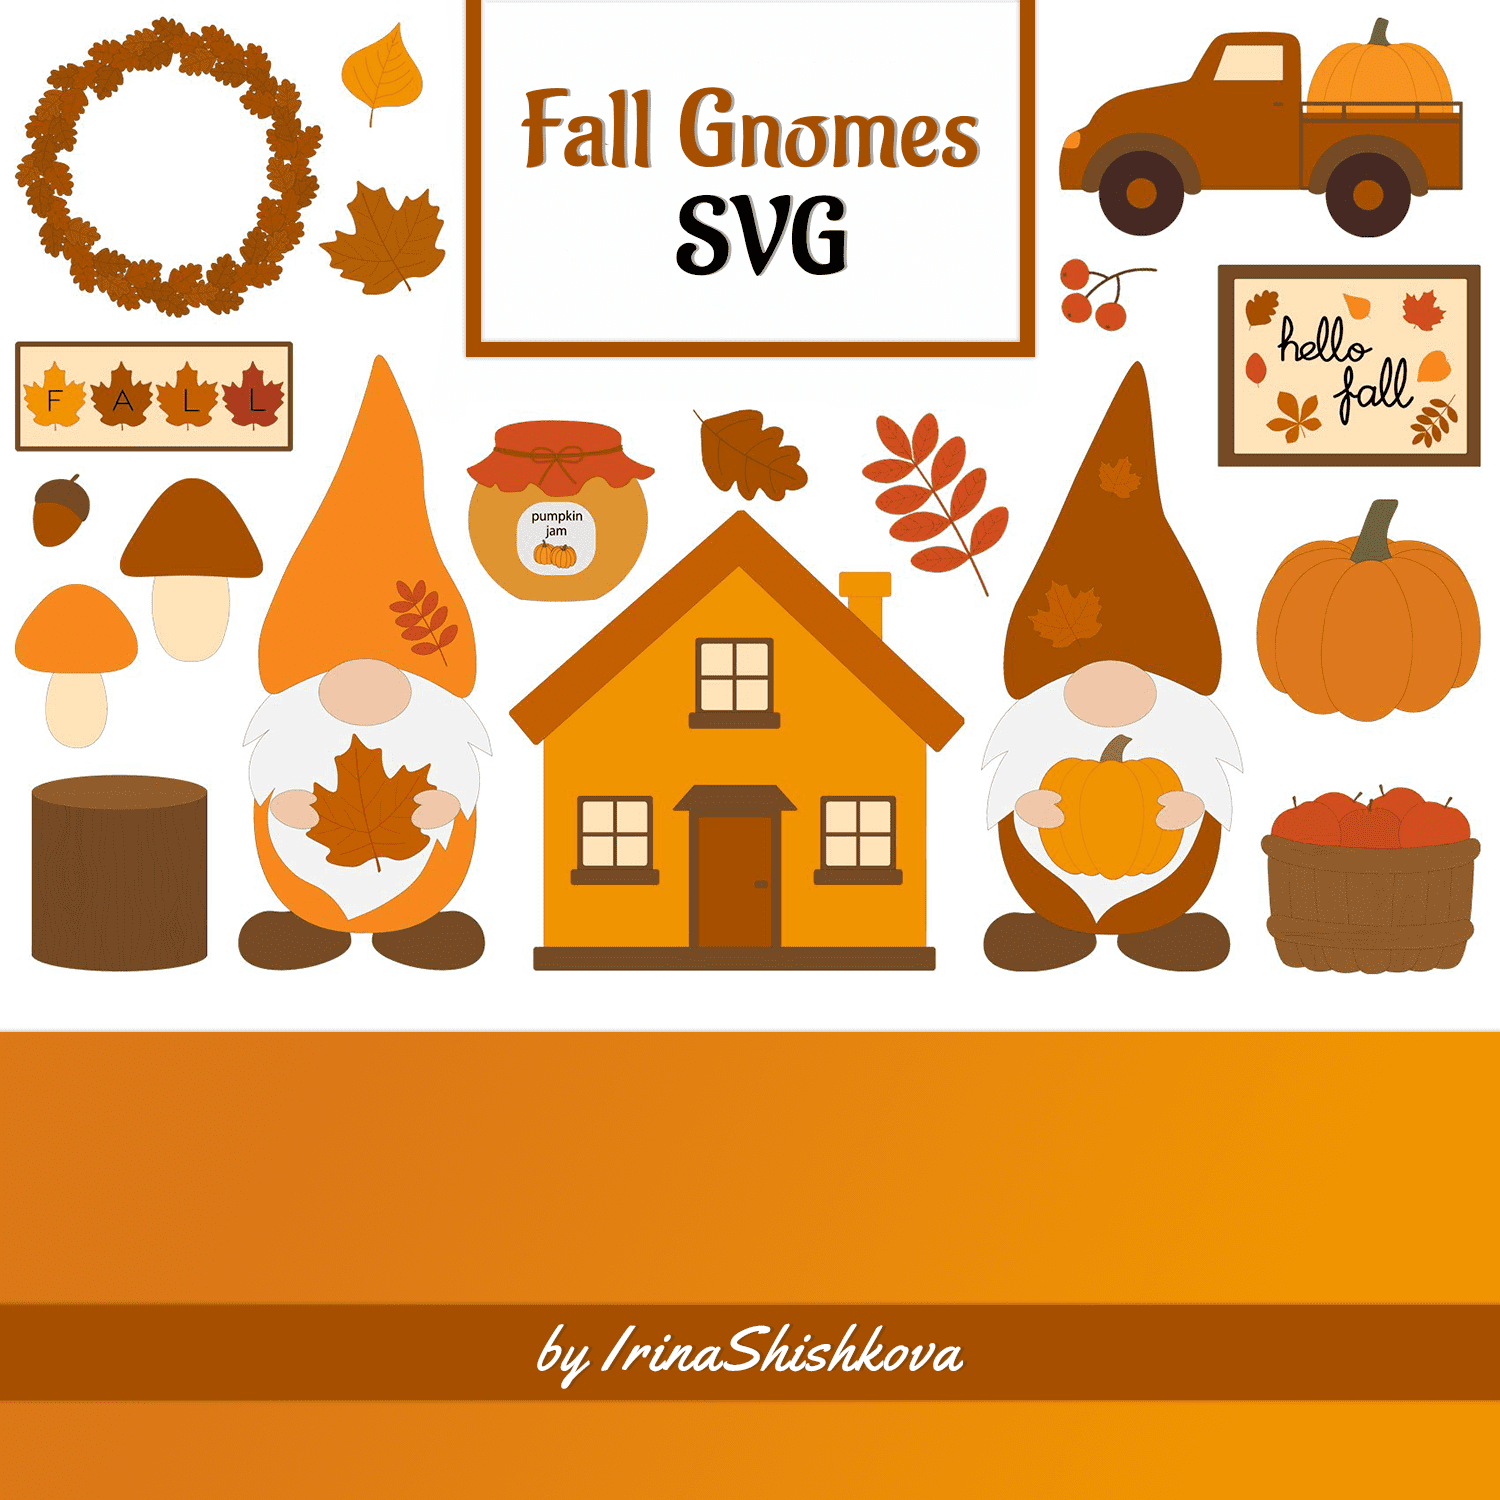 Fall Gnomes SVG. Harvest Gnomes cover.